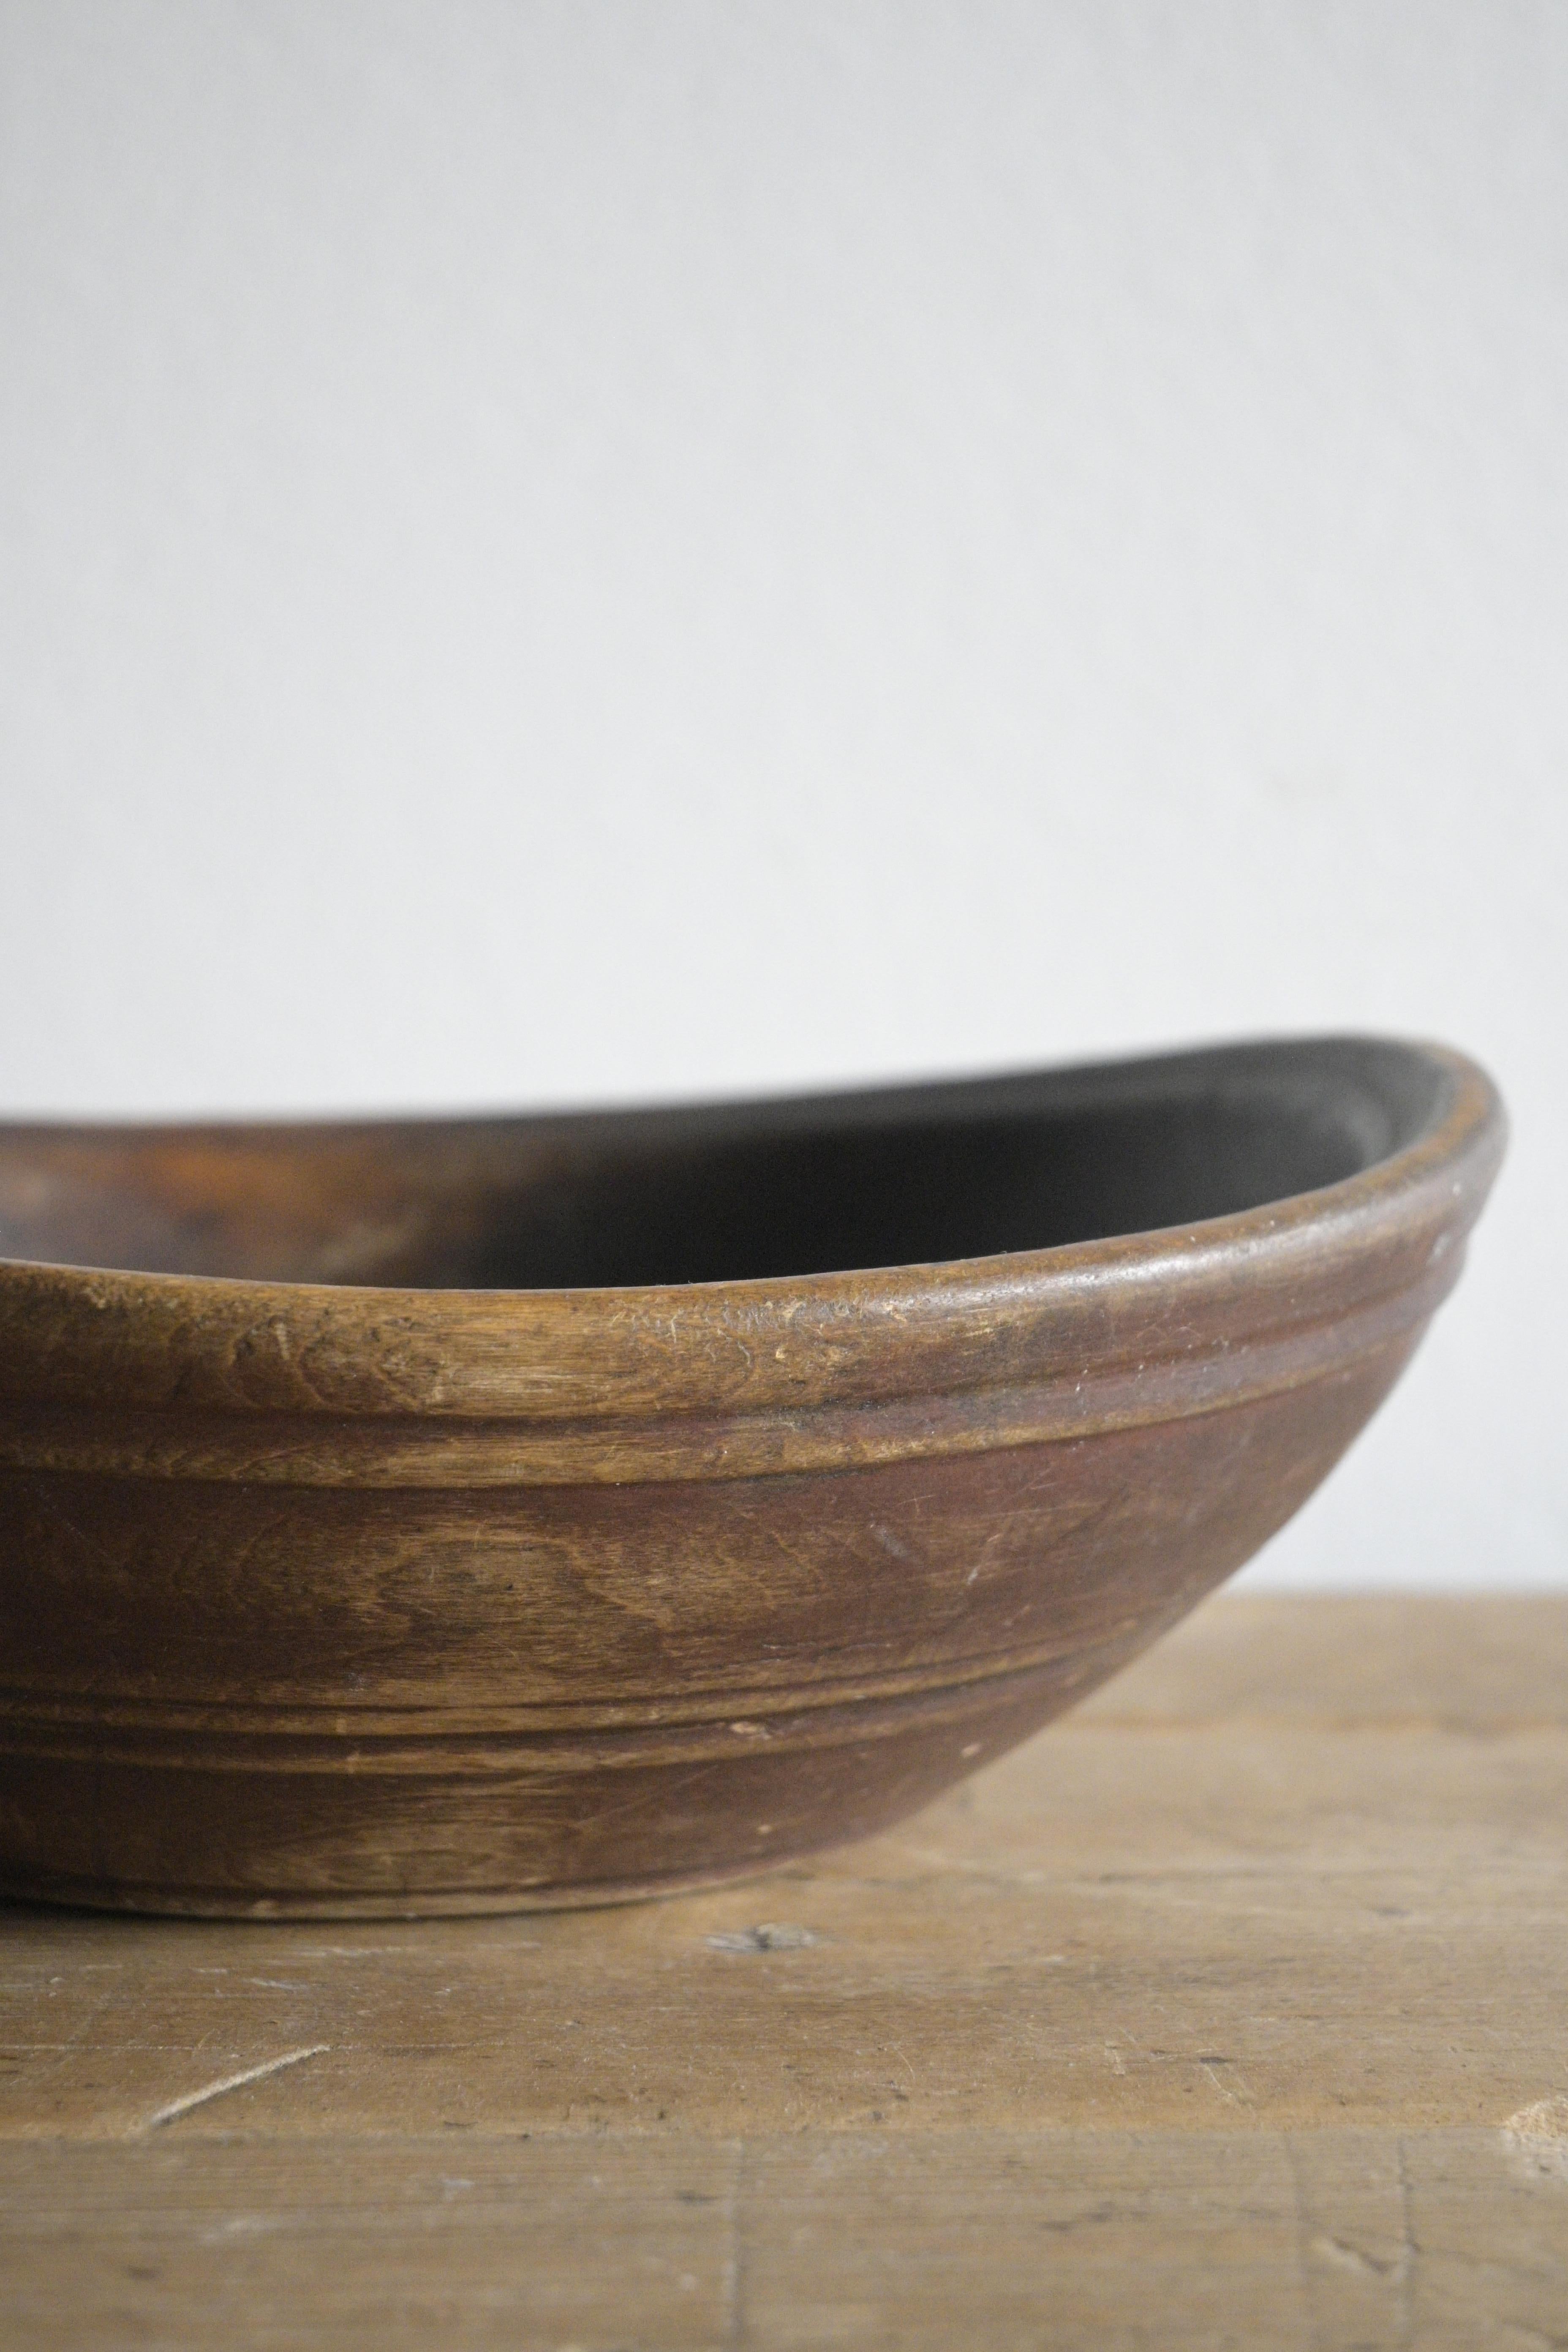 Swedish turned wood Bowl
ca 1880-1890

Made out of birch.

Heigth: 7.5 cm/2.9 inch
Depth: 21.5 cm/8.4 inch
Widht: 22 cm/8.6 inch